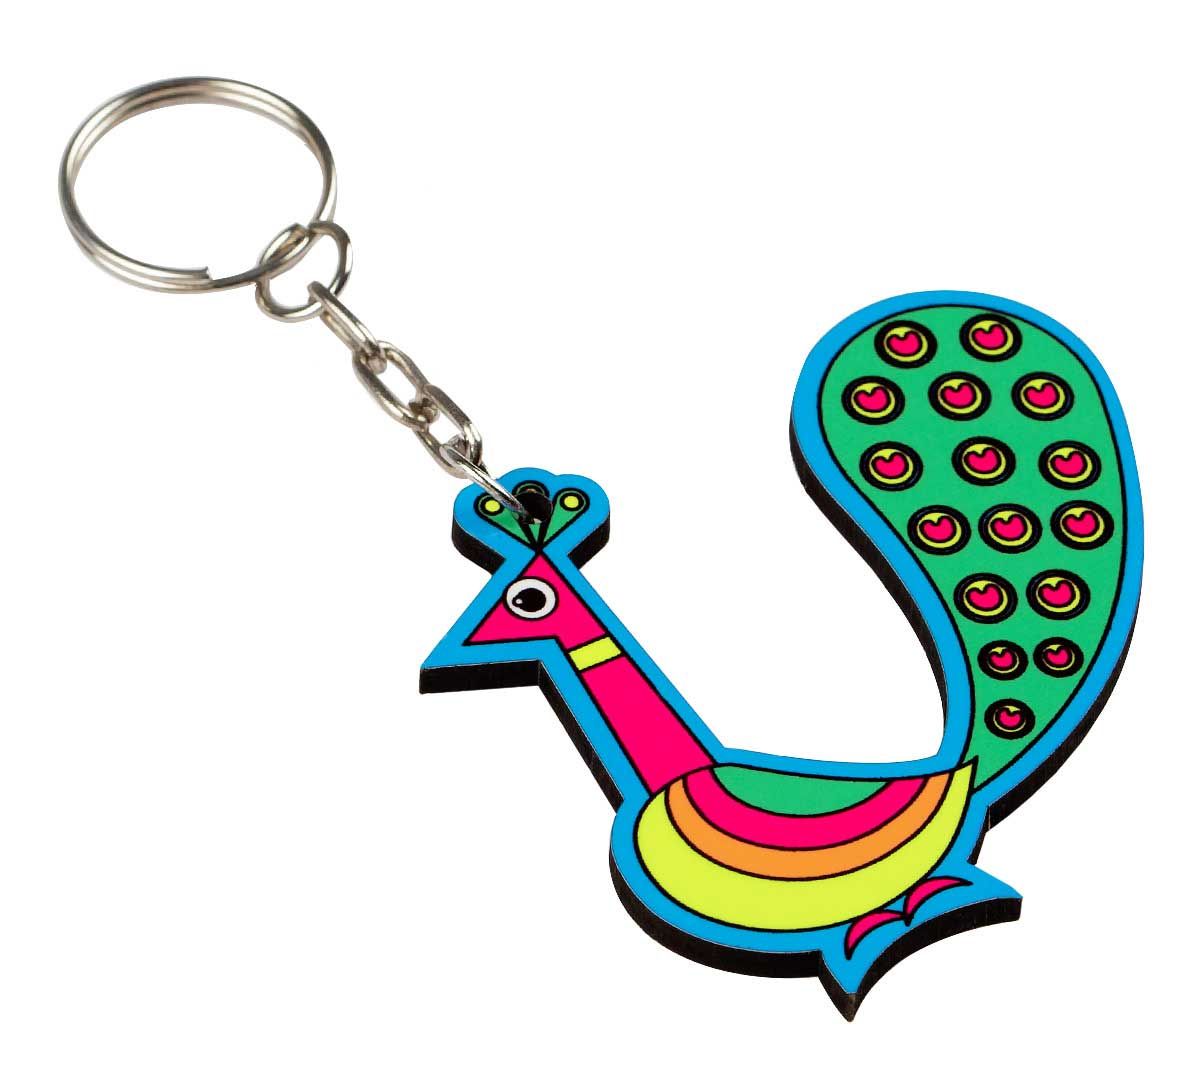 Perky Peafowl Keychain